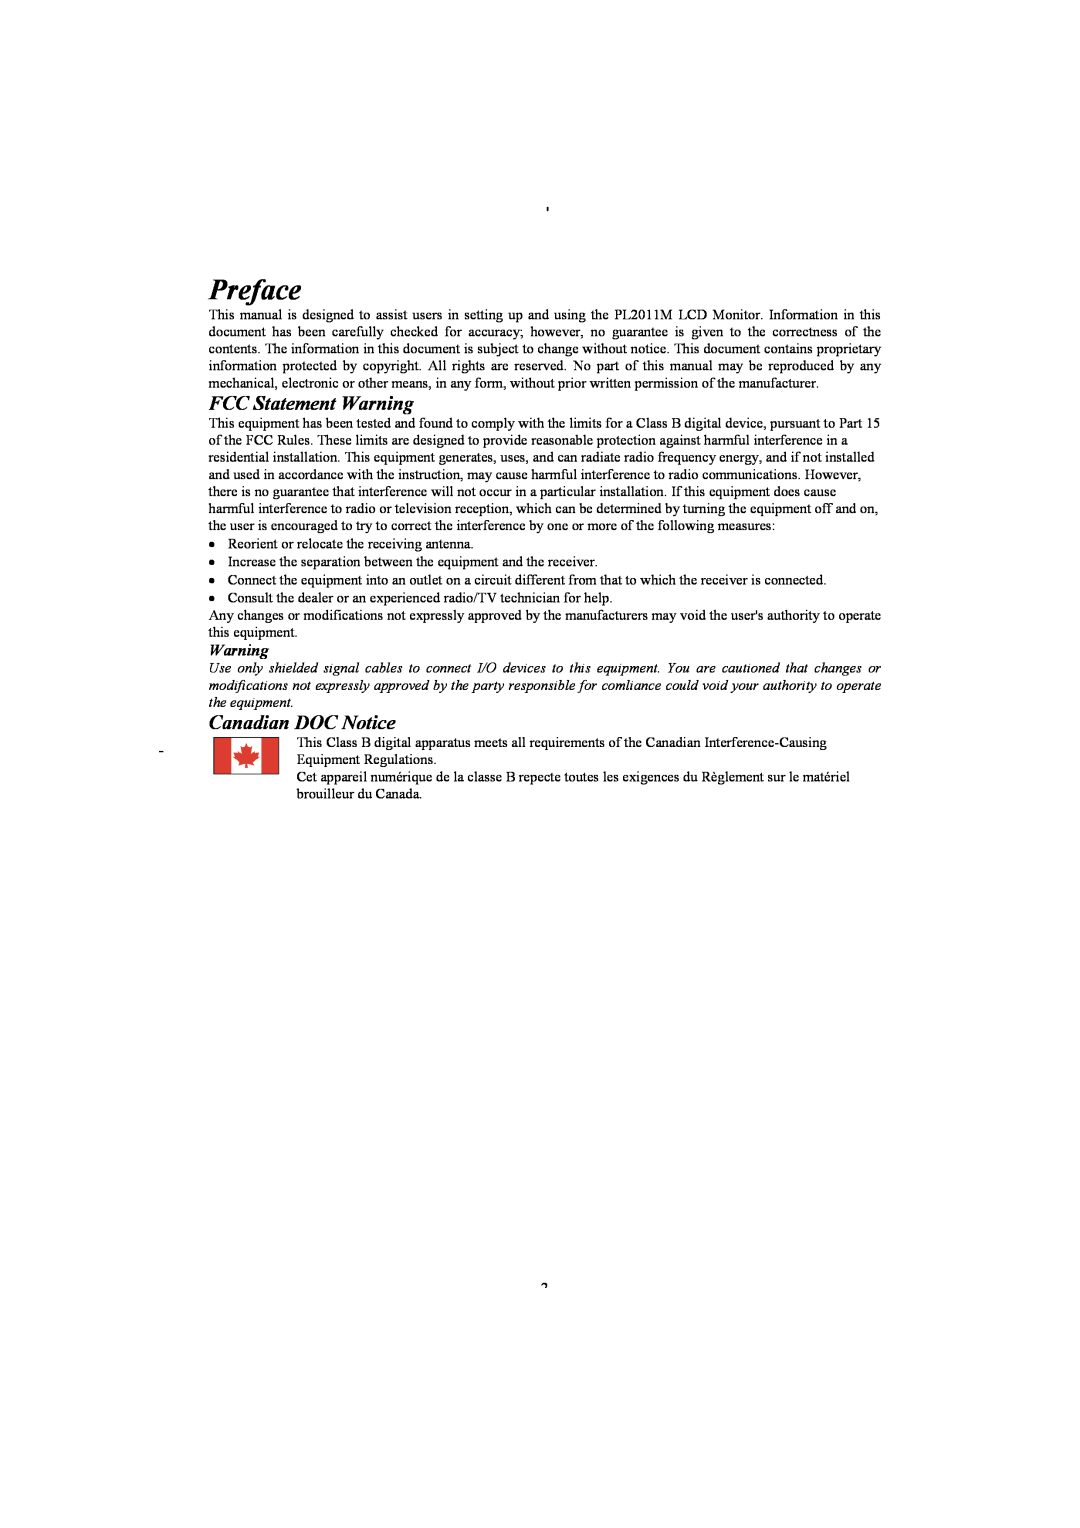 Planar PL2011 manual Preface, FCC Statement Warning, Canadian DOC Notice 